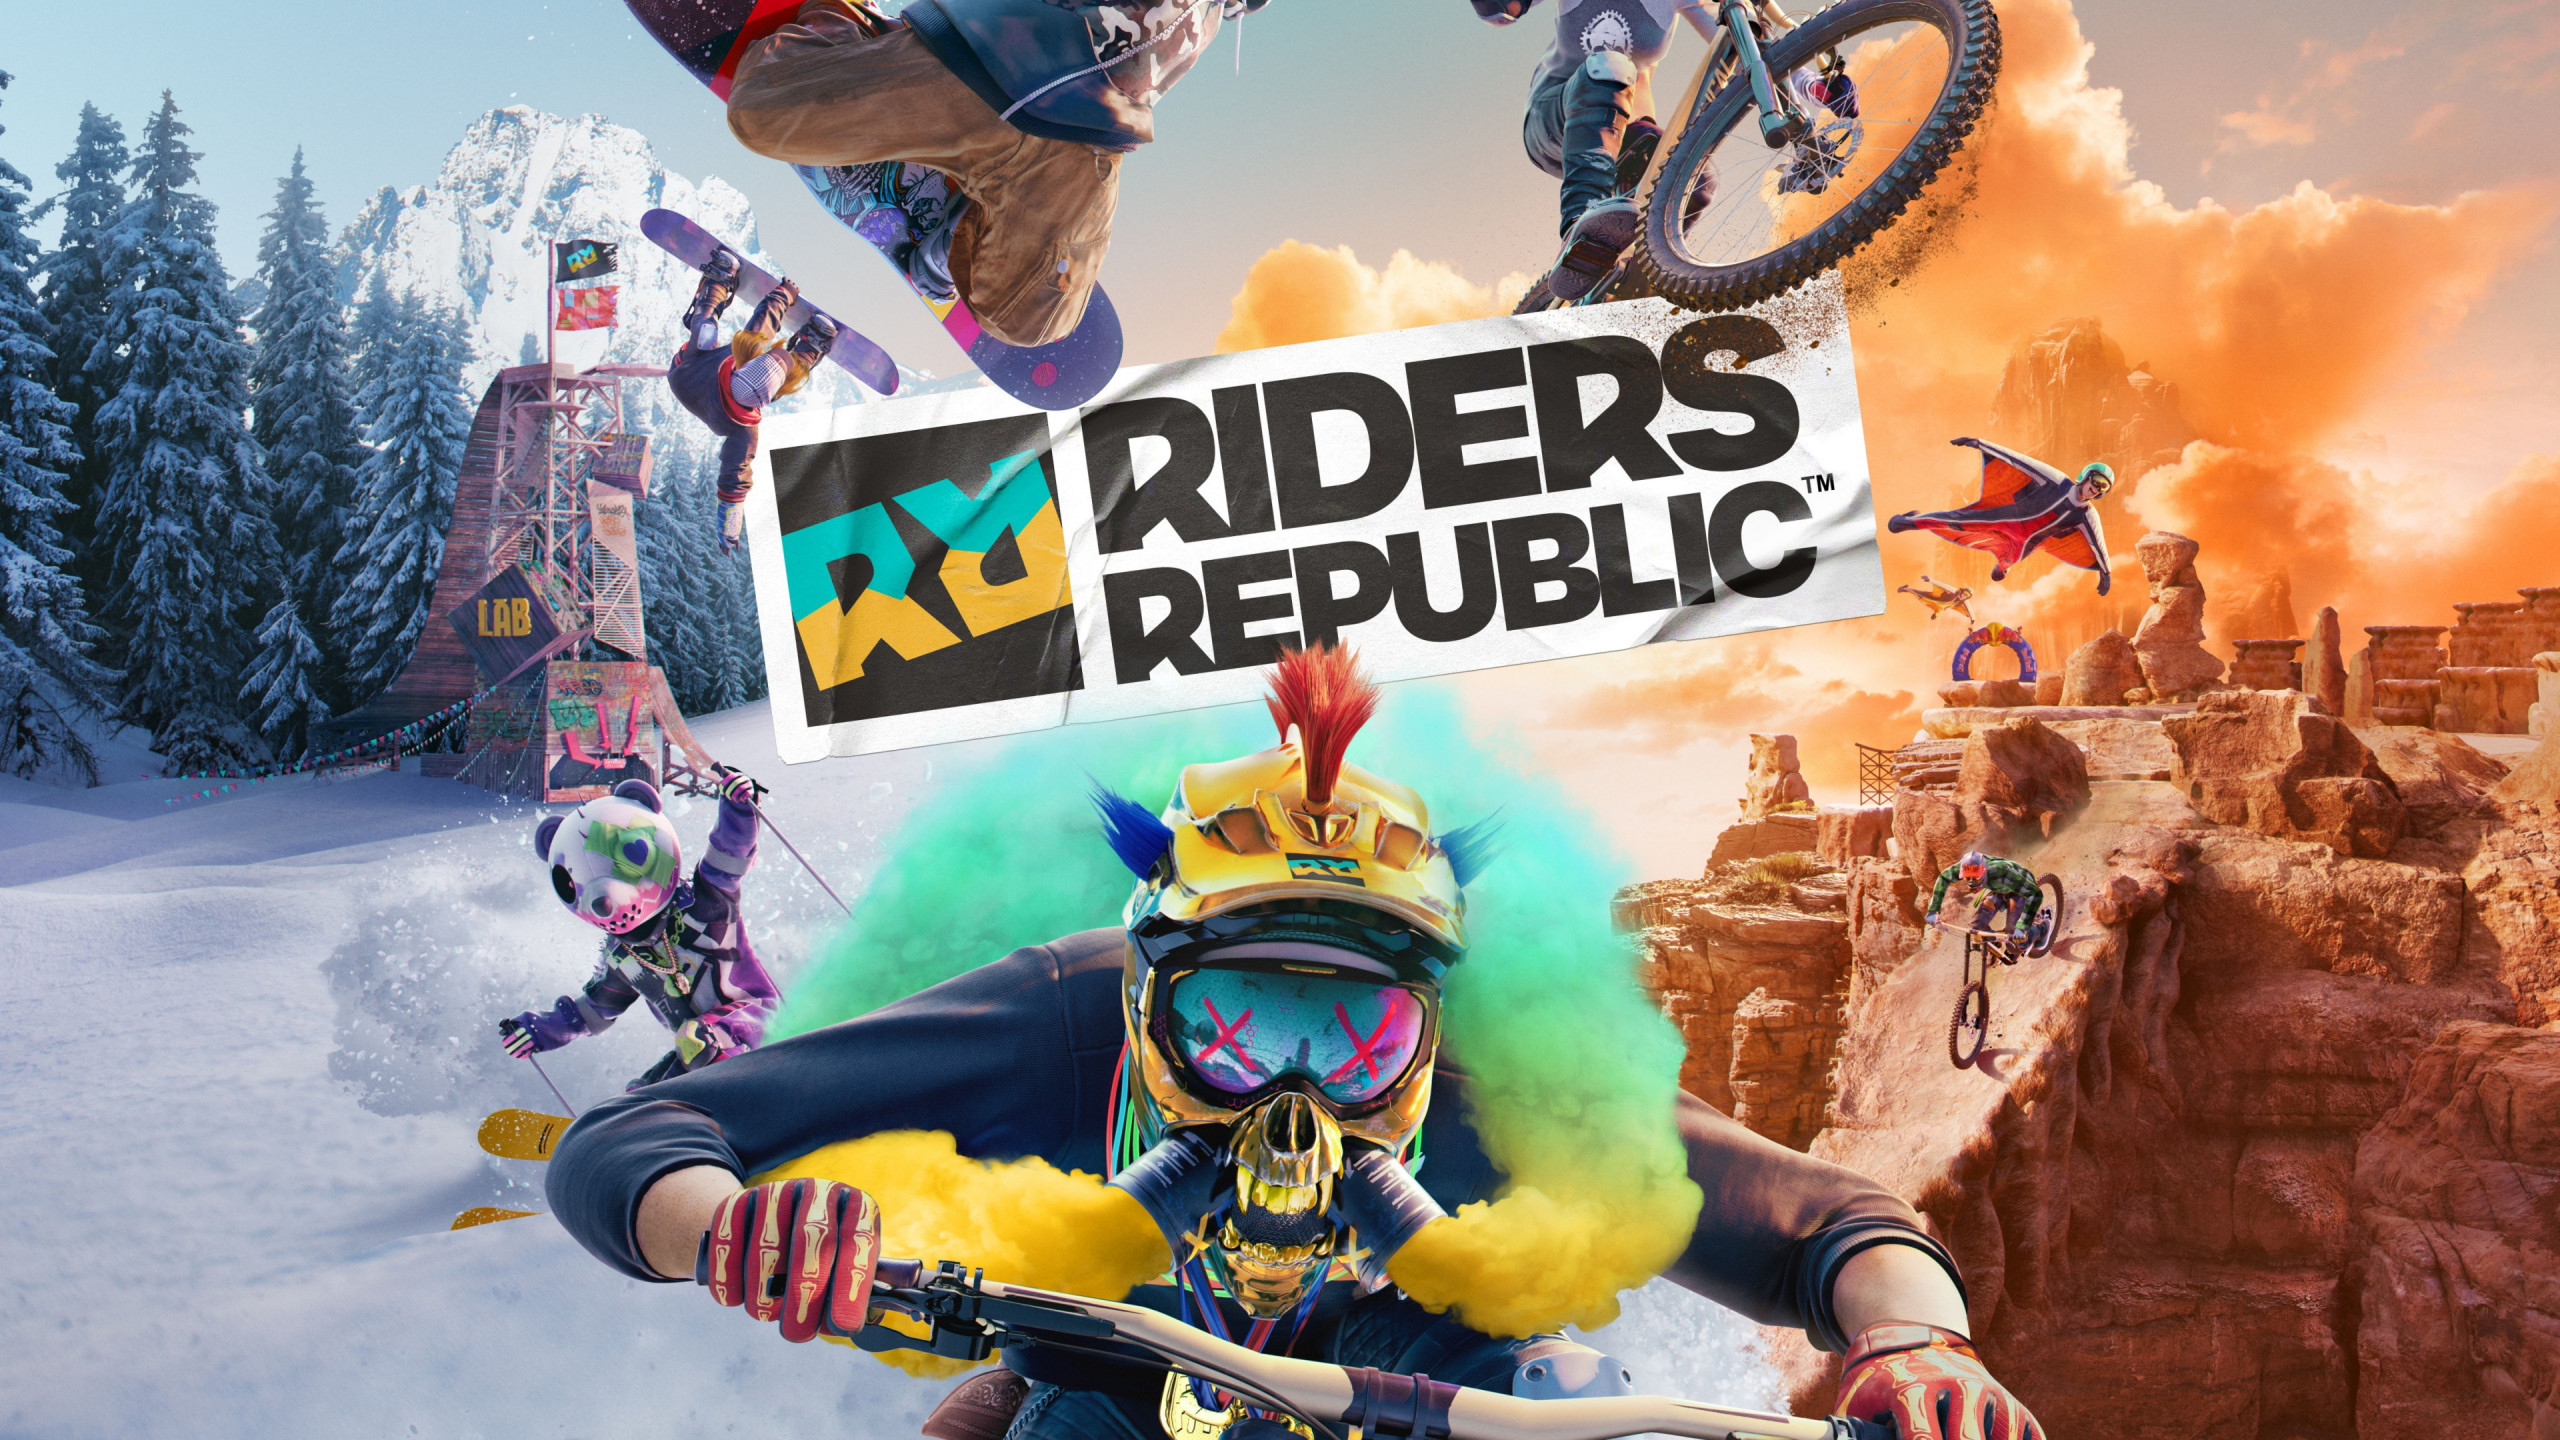 Riders Republic poster wallpaper 2560x1440